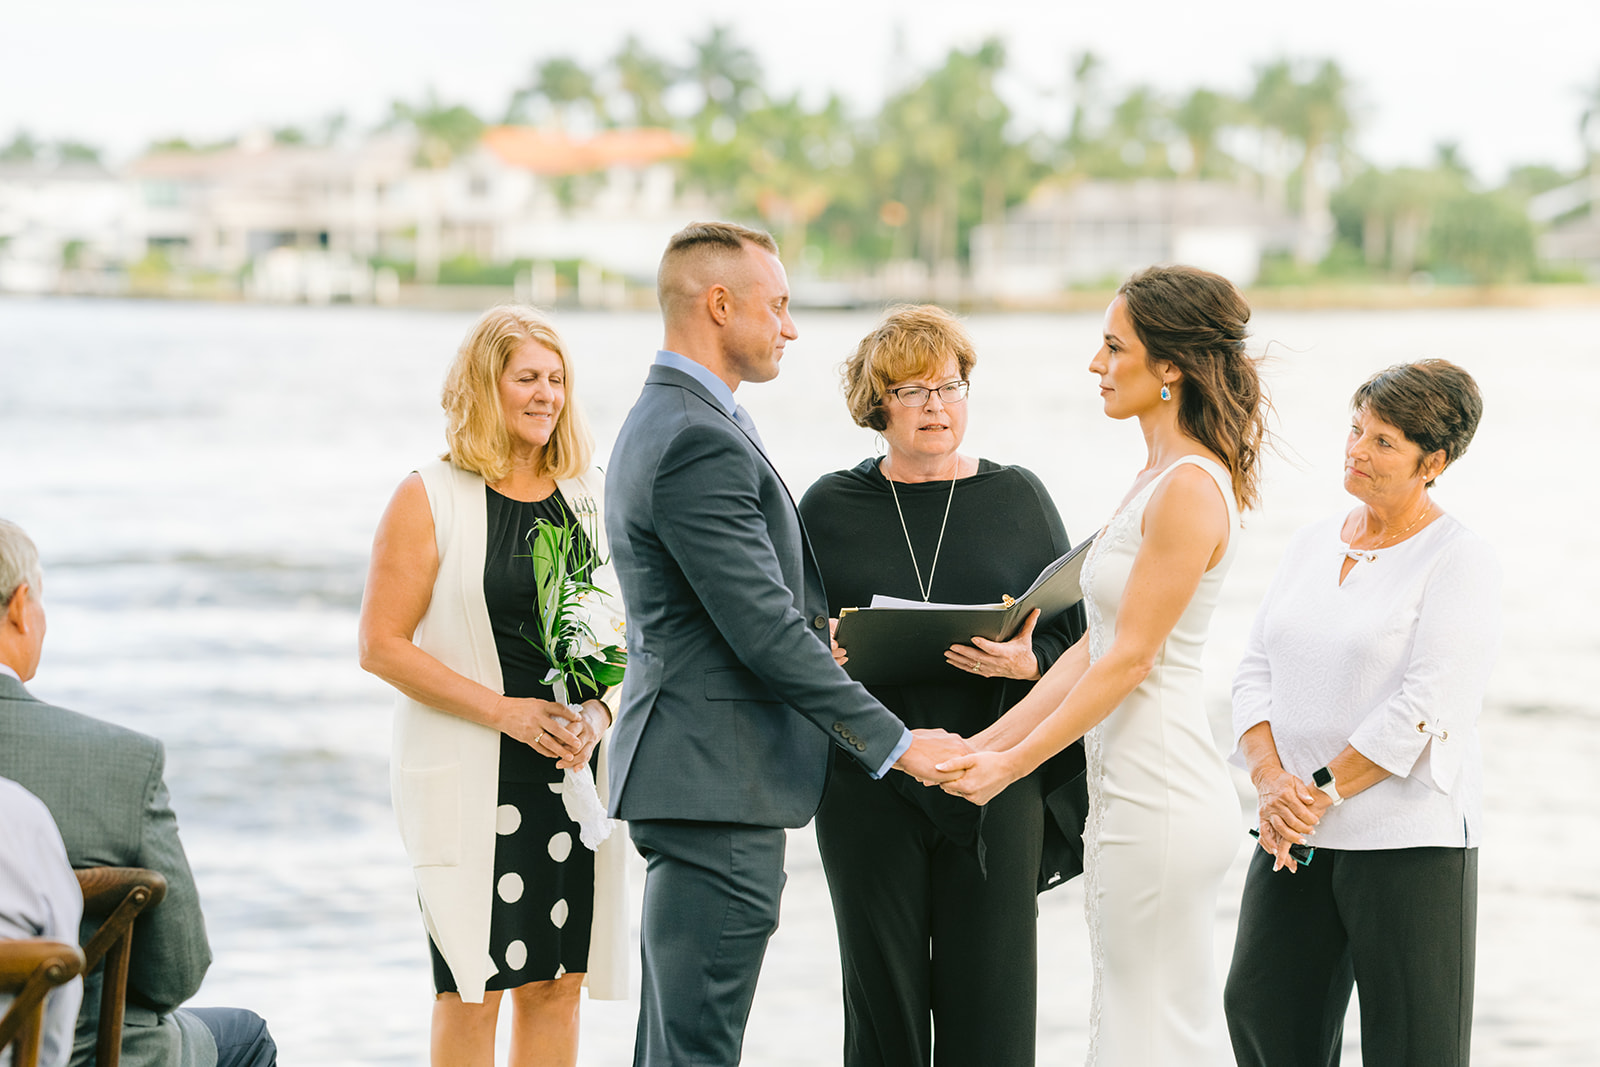 Naples FL wedding photographer captures the newlyweds walking down the aisle
